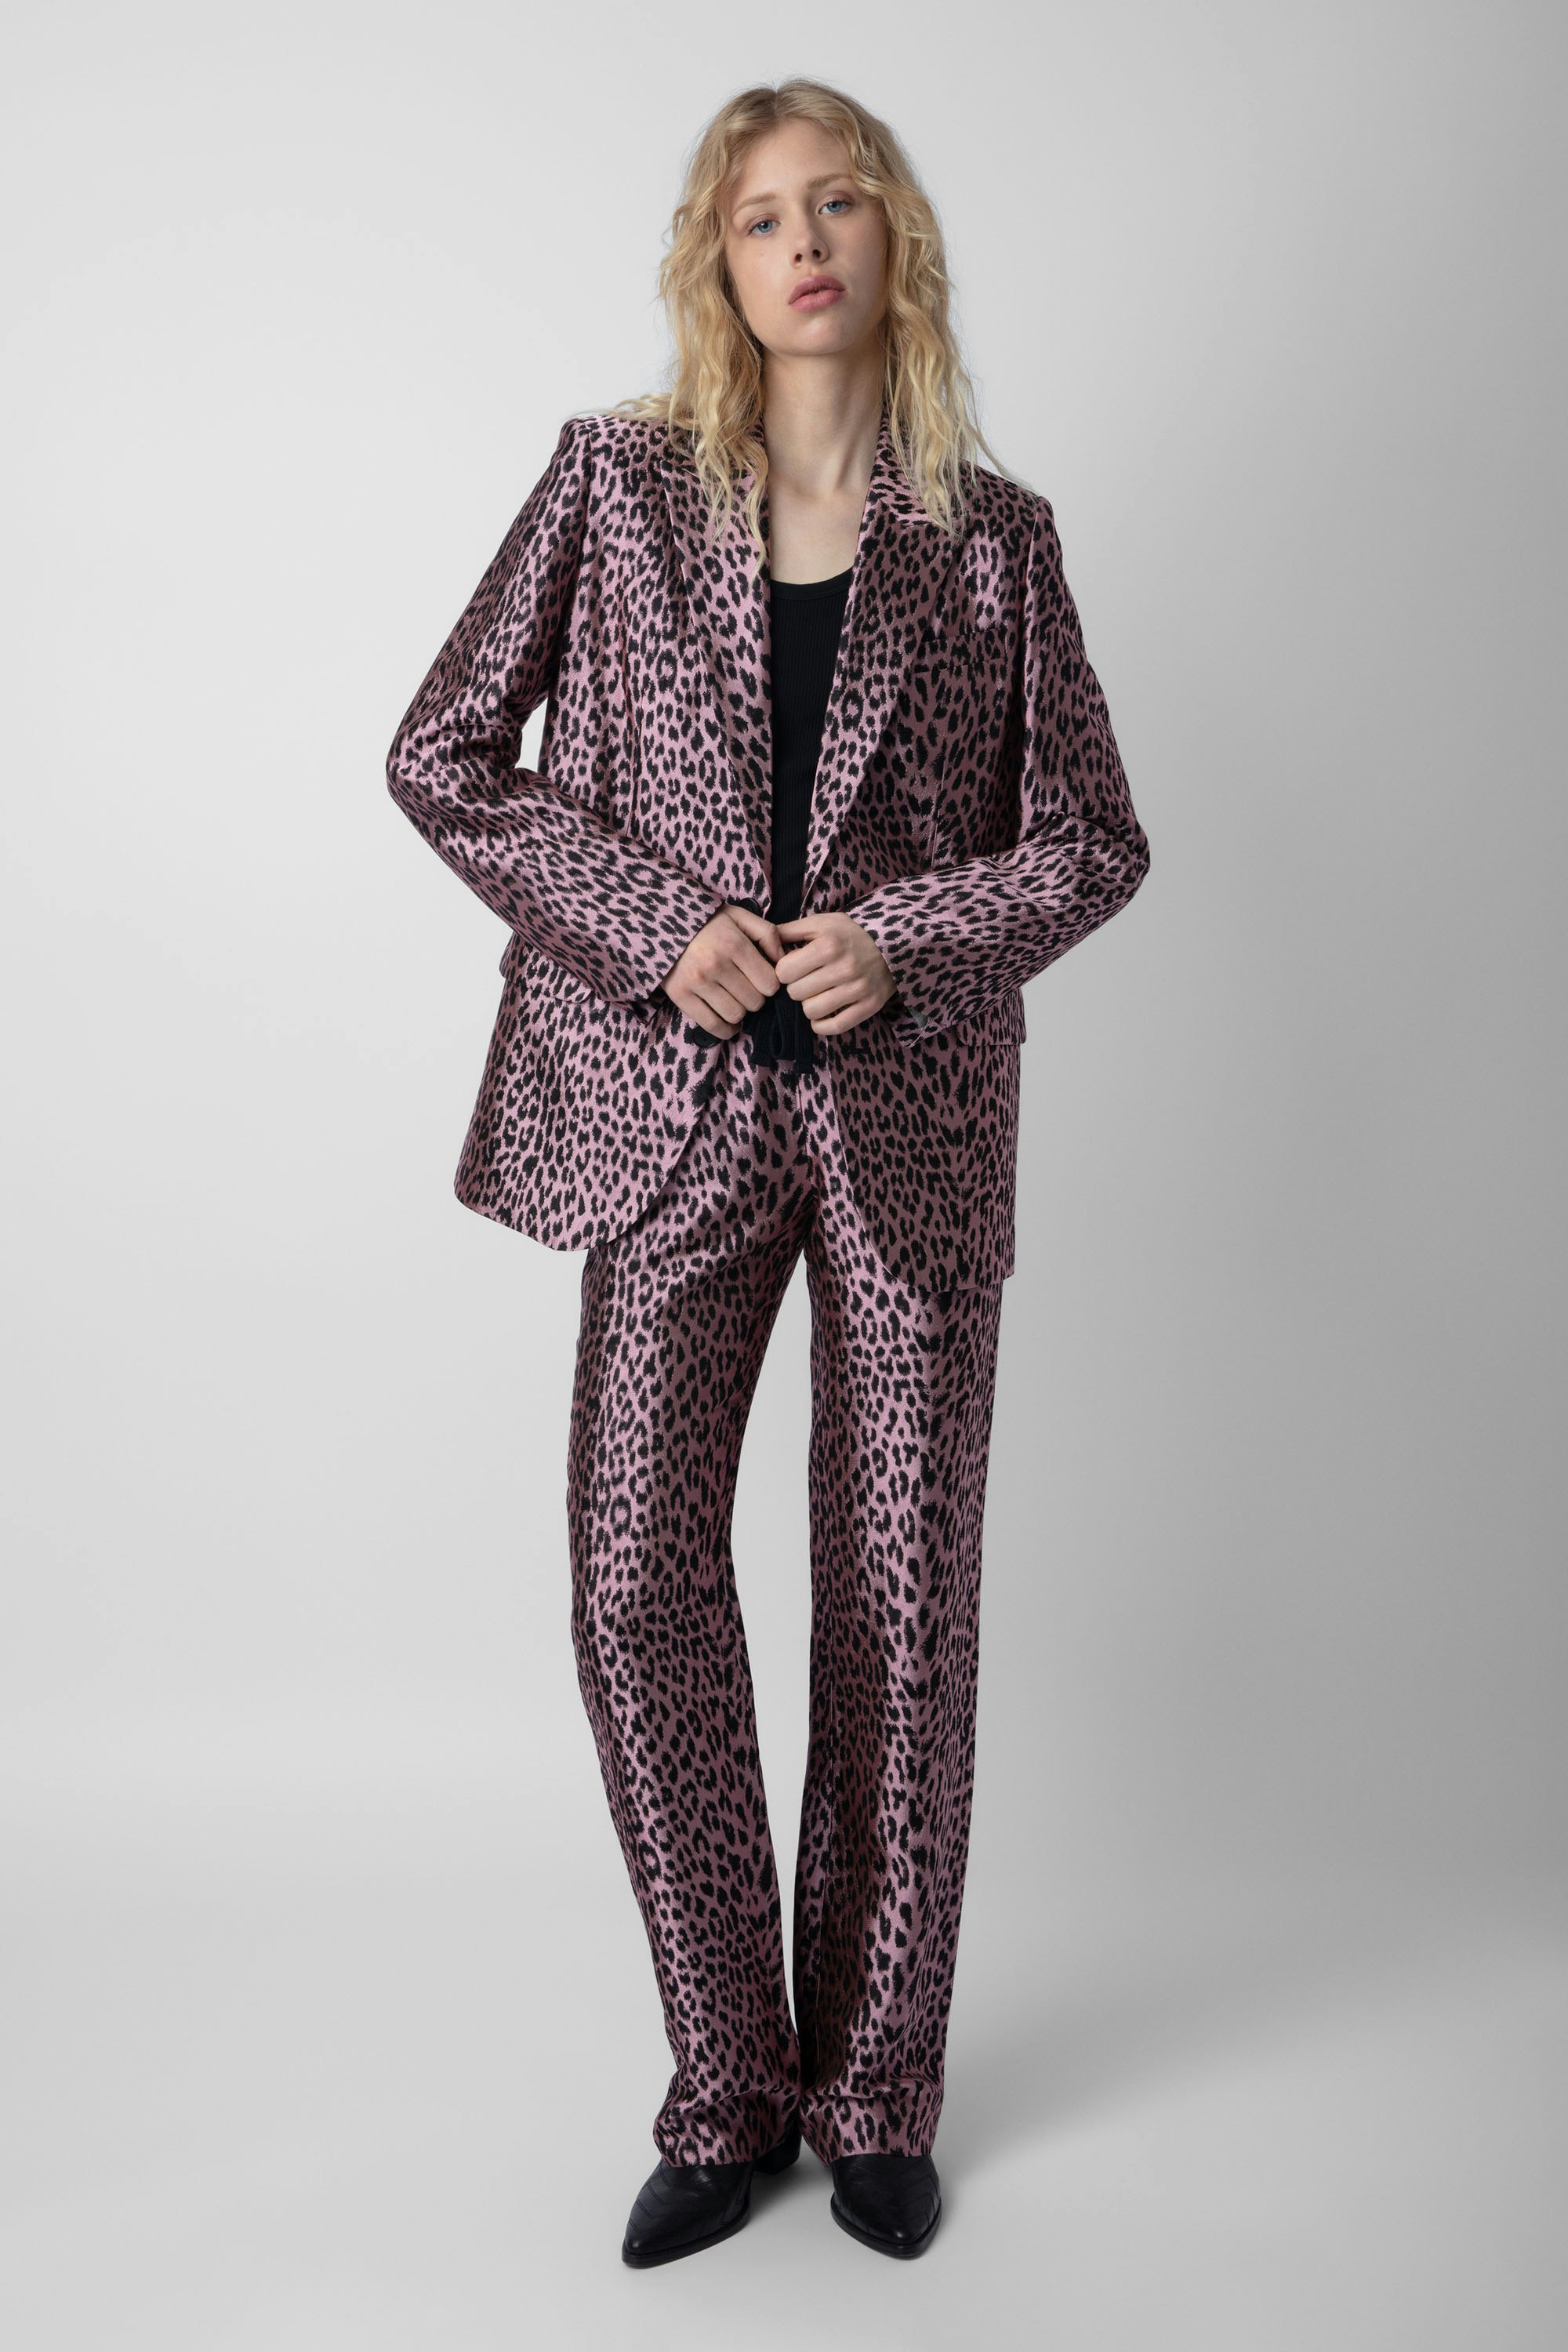 Pomy Leopard Jacquard Trousers - Women's pink leopard jacquard trousers